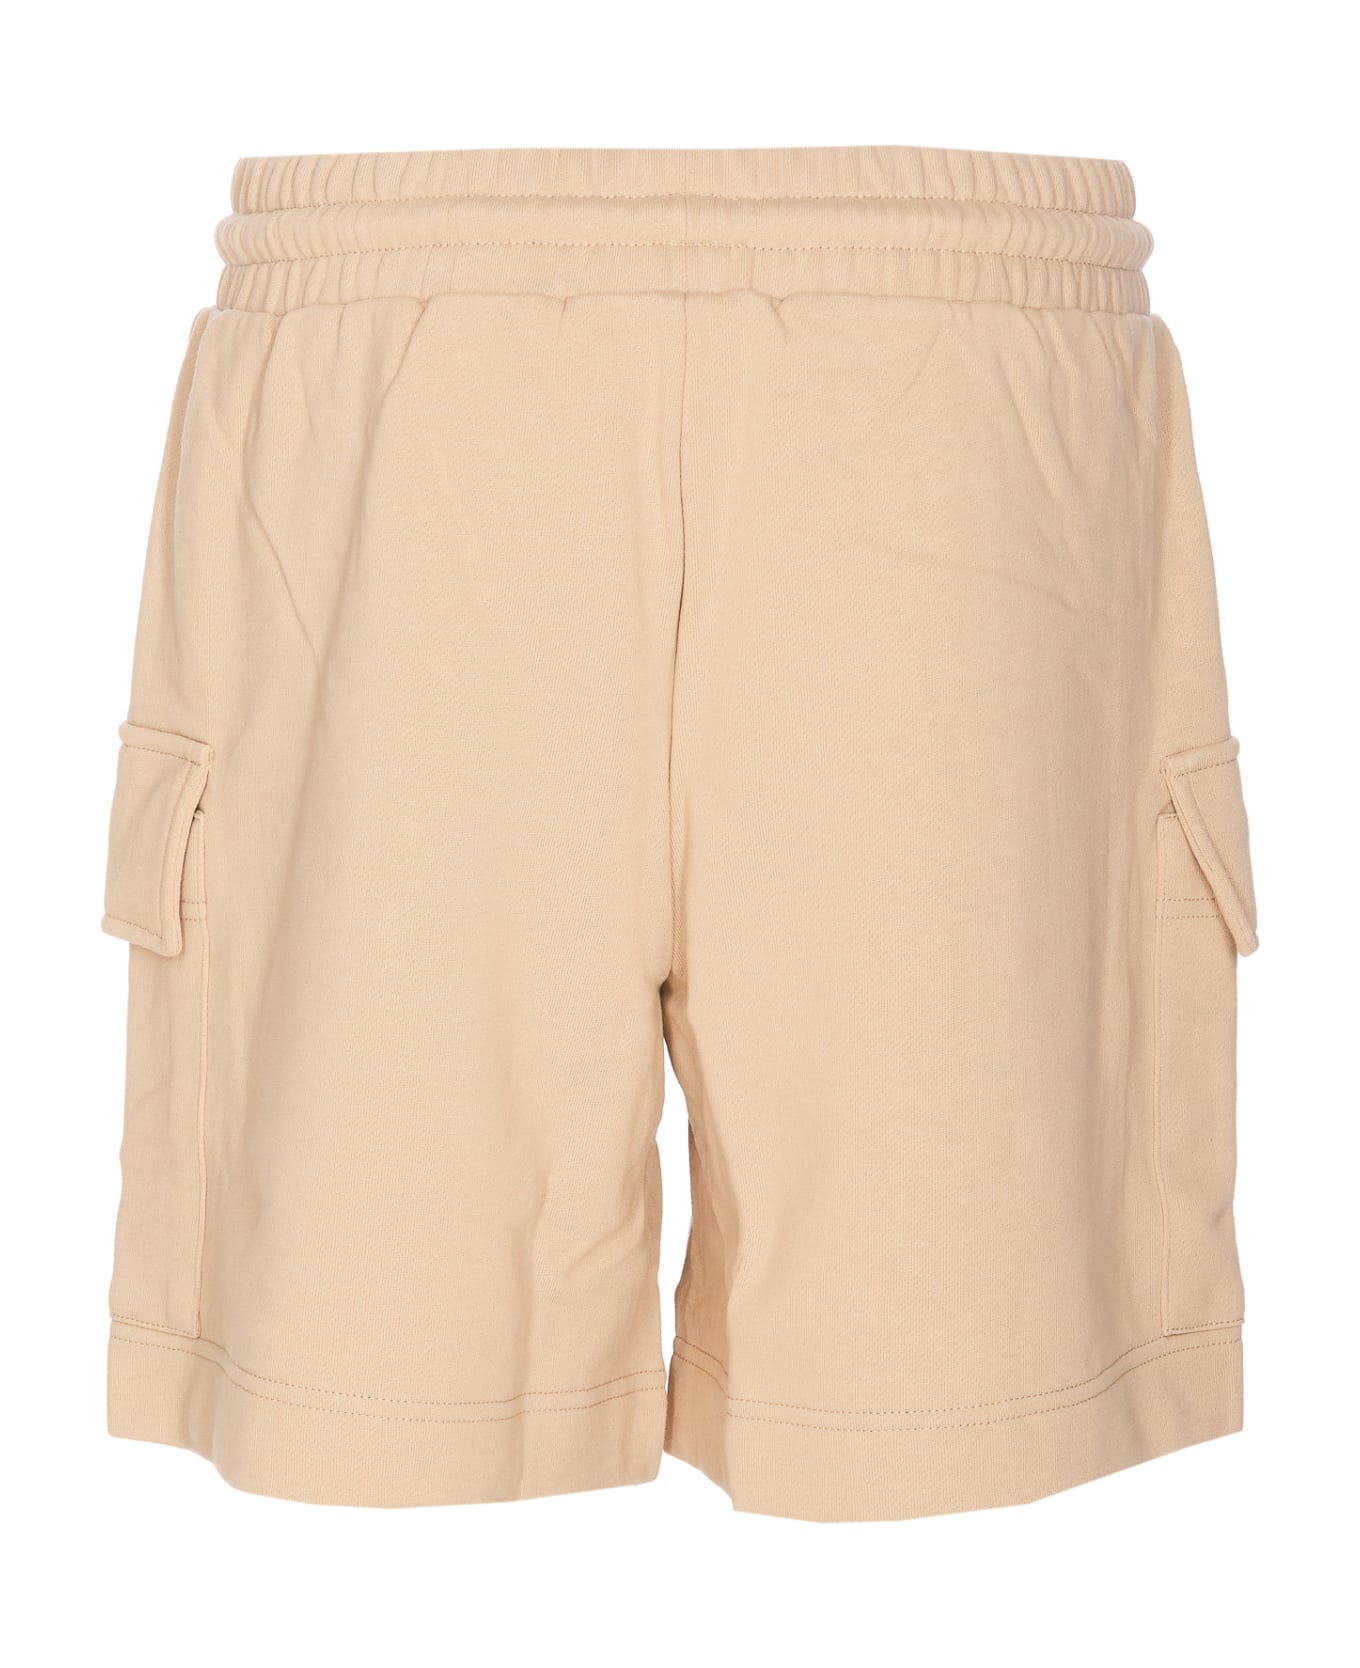 TwinSet Shorts - Beige ショートパンツ